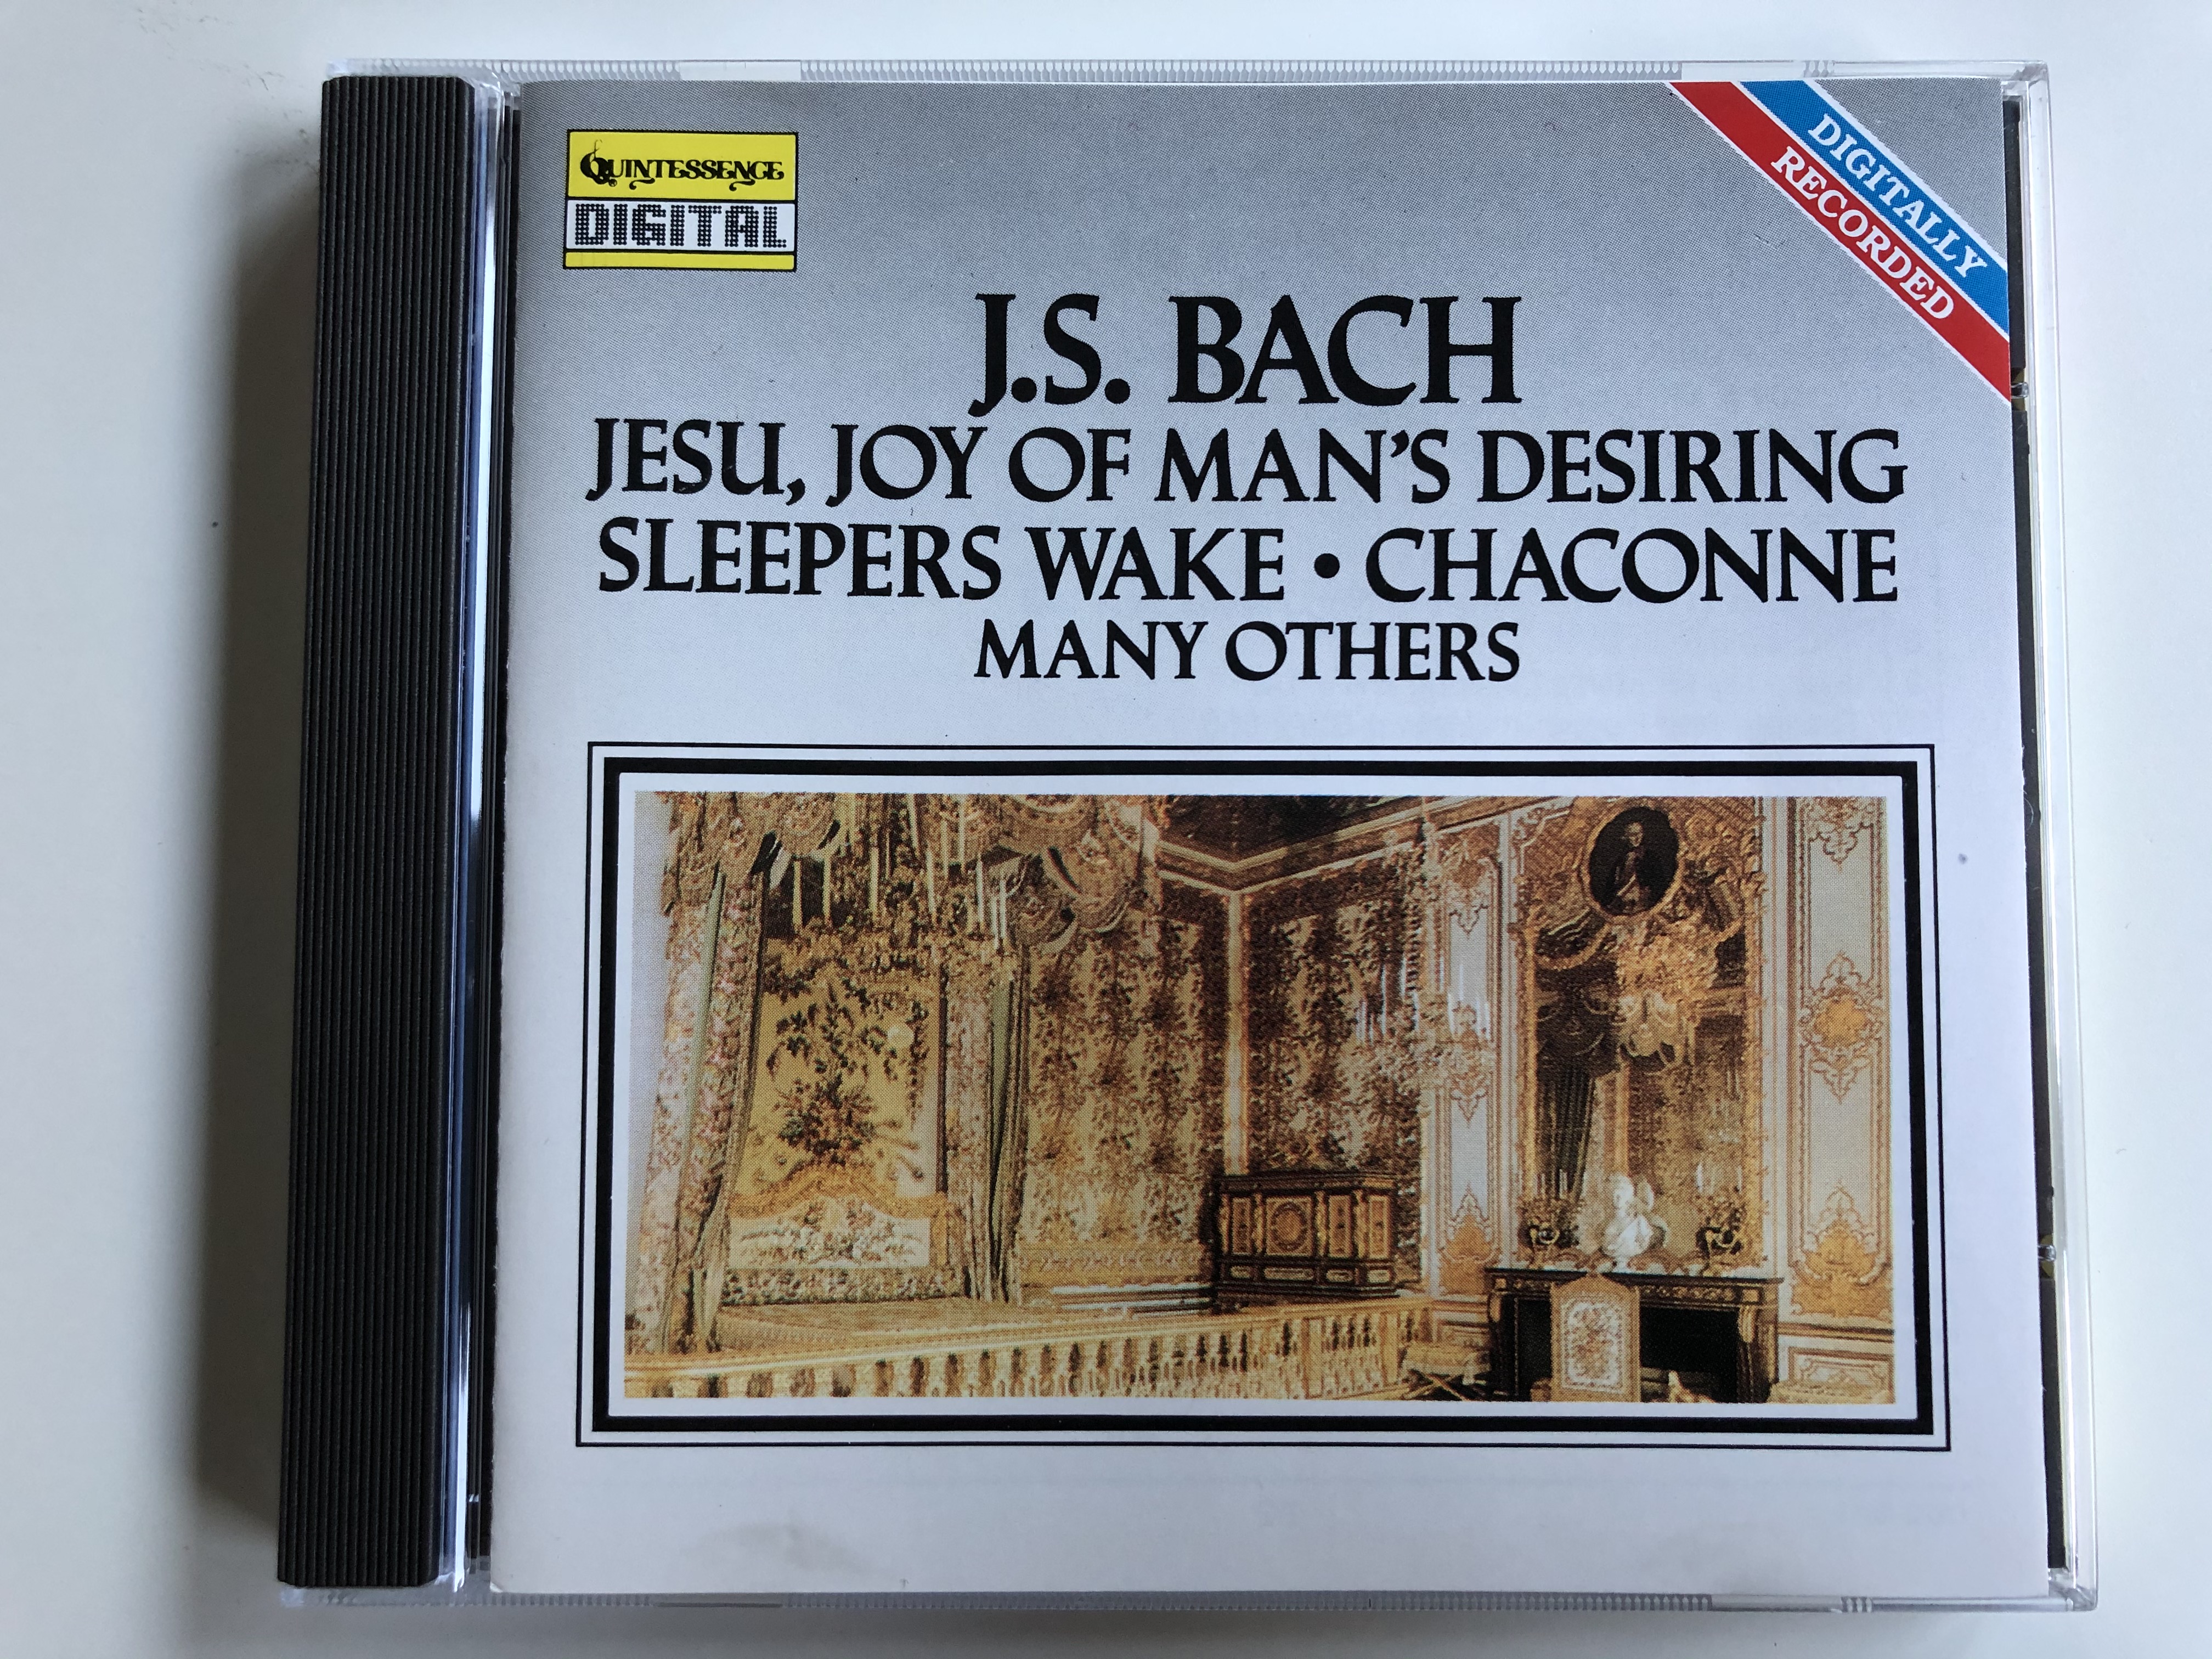 j.s.-bach-jesu-joy-of-man-s-desiring-sleepers-wake-chaconne-many-others-intersound-audio-cd-1990-cdq-2018-1-.jpg